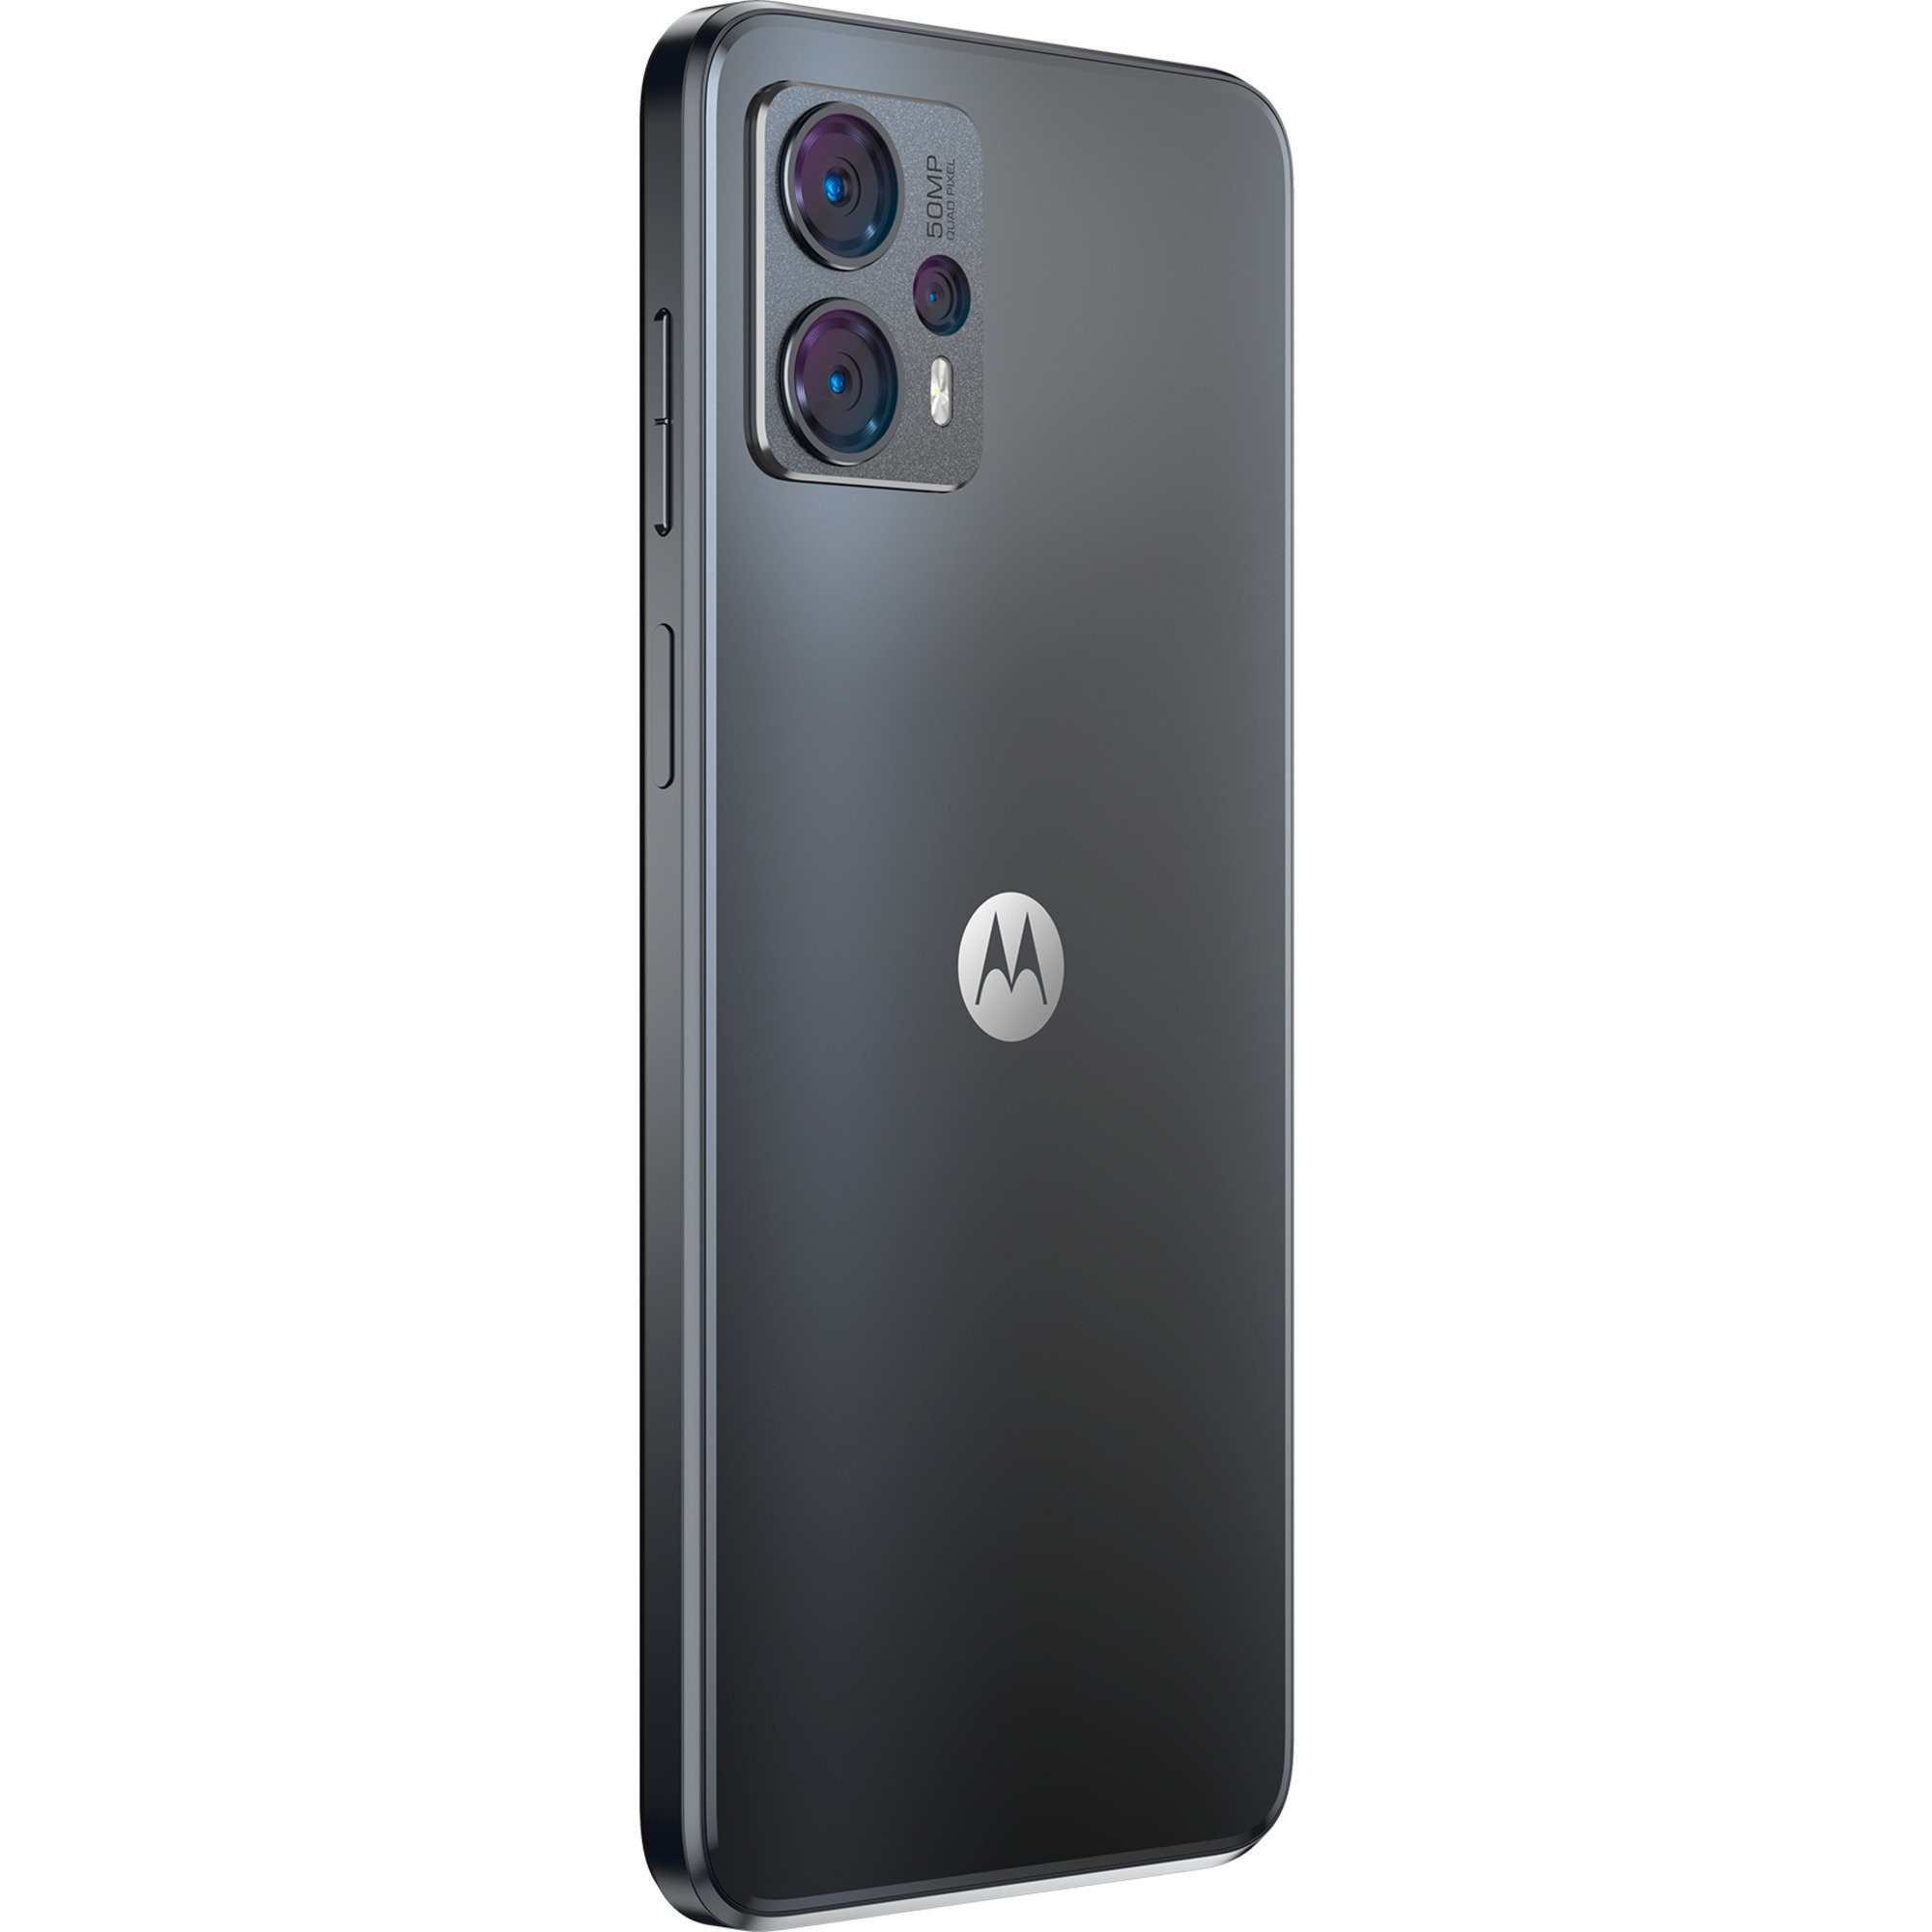 Handy, G23 Smartphone Kamera) (50 MP Lenovo Motorola Moto Charcoal, MP Motorola 128GB, (Matte